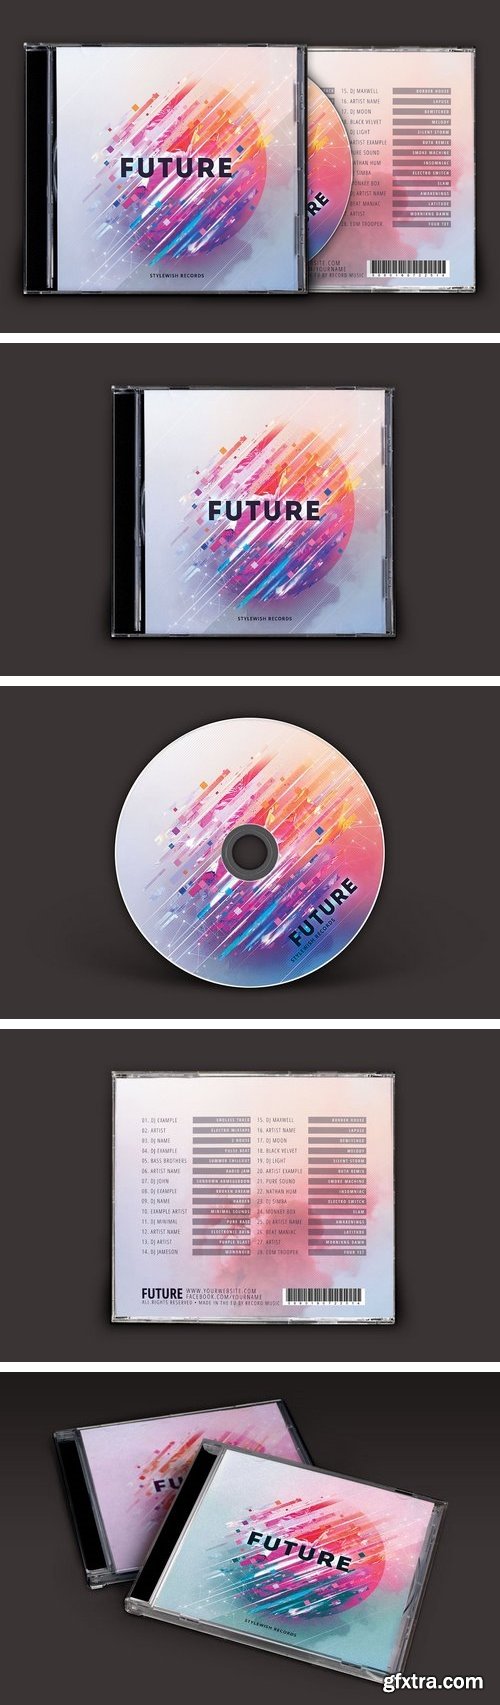 CM - Future CD Cover Artwork 2018116